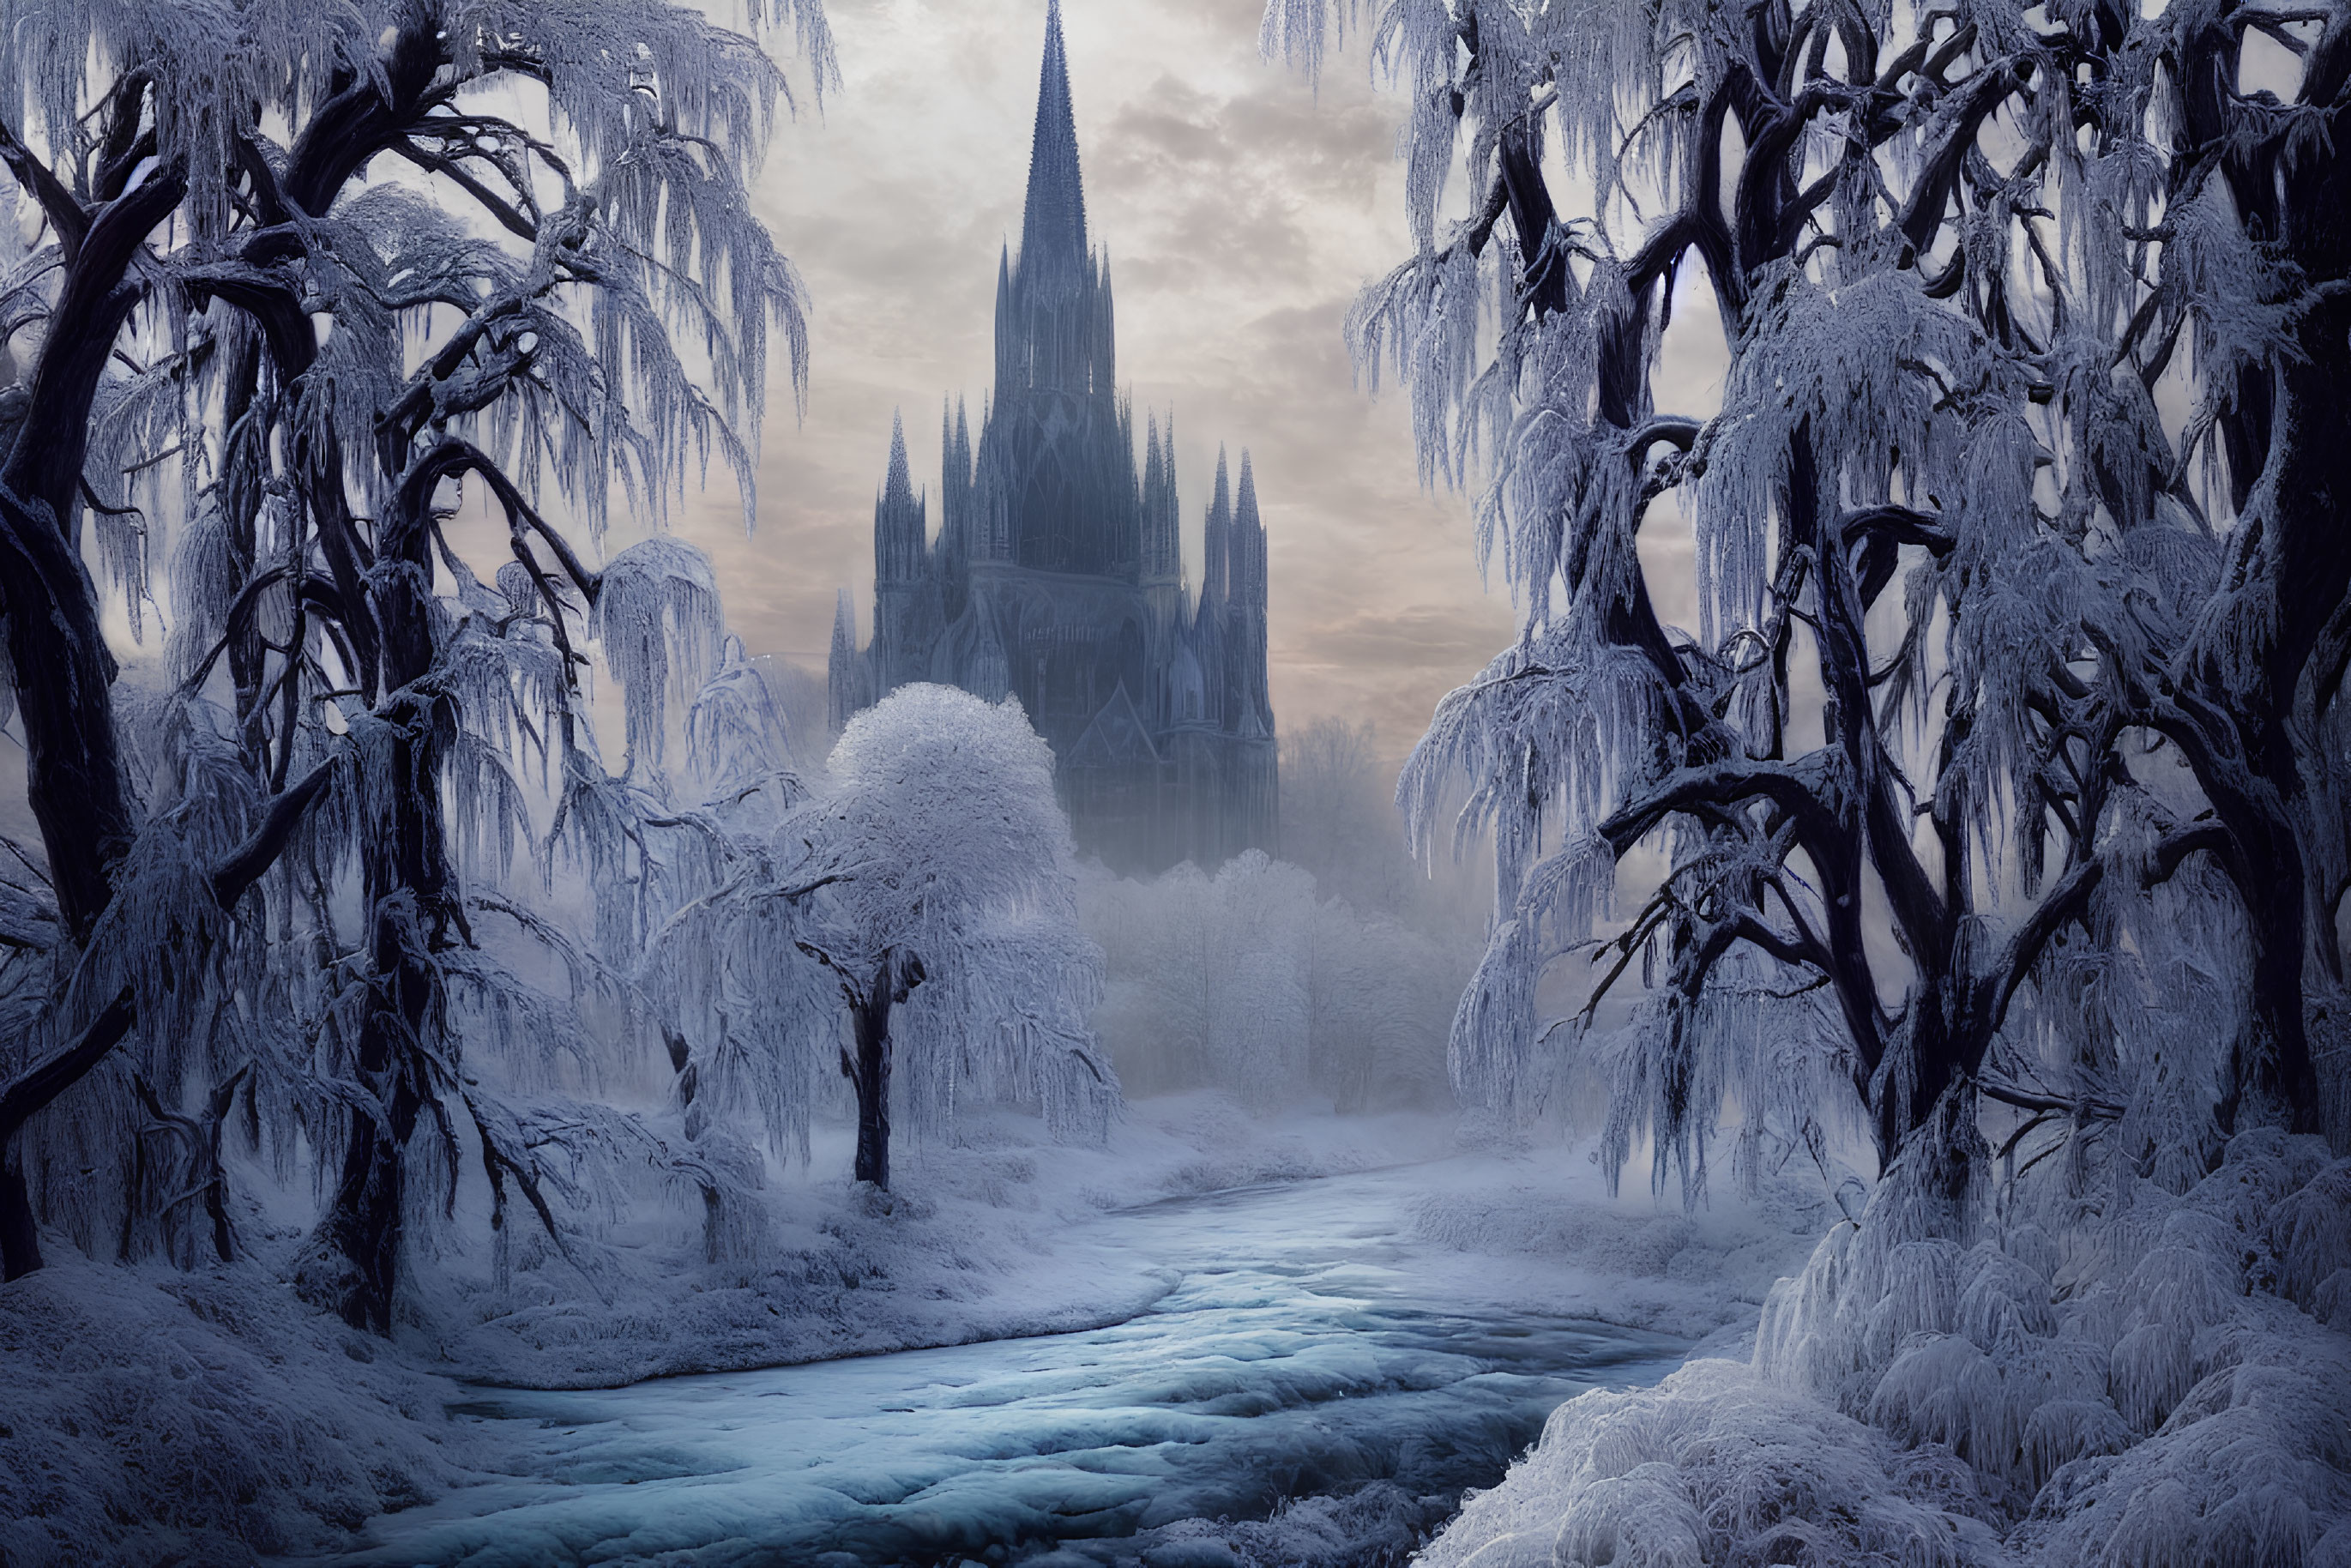 Frozen river, castle, snow-covered trees in twilight scene